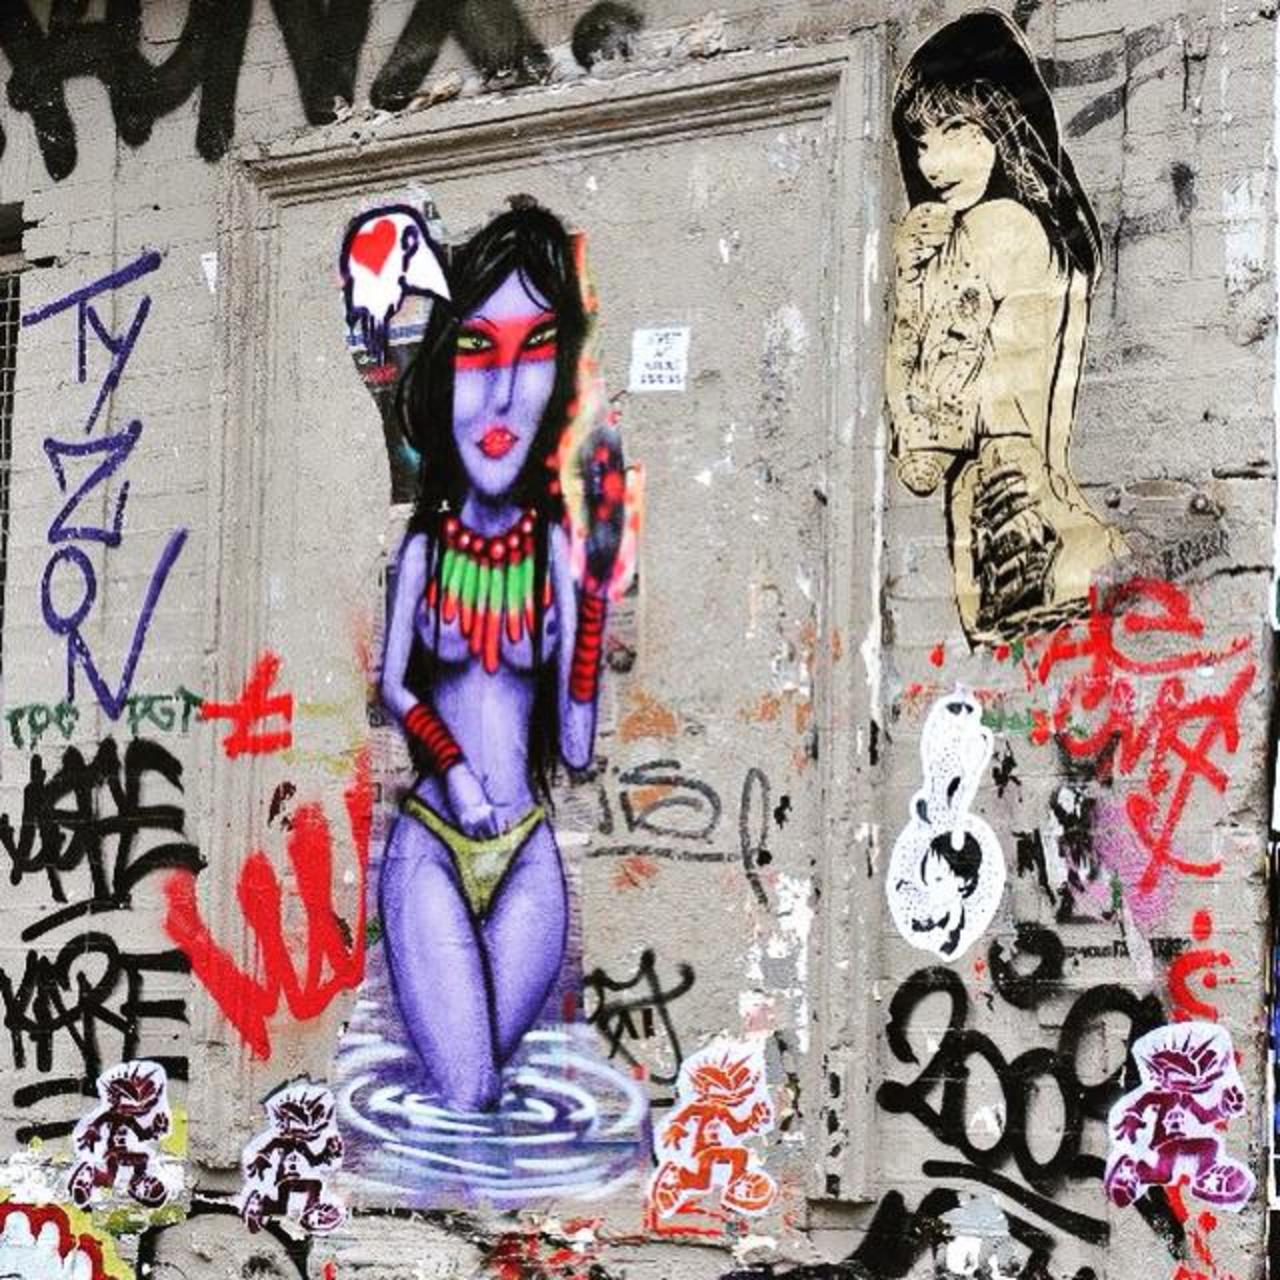 RT @circumjacent_fr: #Paris #graffiti photo by @urbanhearts http://ift.tt/1Vwtq2w #StreetArt http://t.co/B76Gyg4nvi